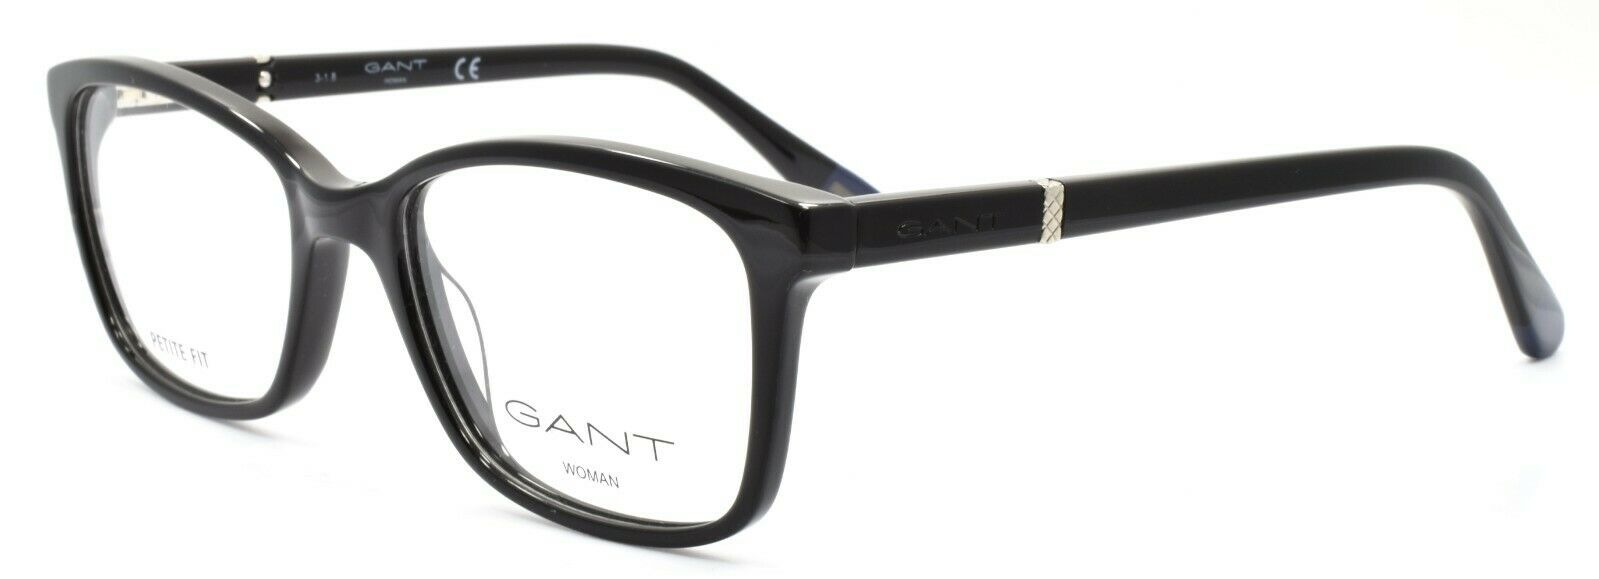 1-GANT GA4070 001 Women's Eyeglasses Frames PETITE 50-17-135 Shiny Black + CASE-664689846238-IKSpecs